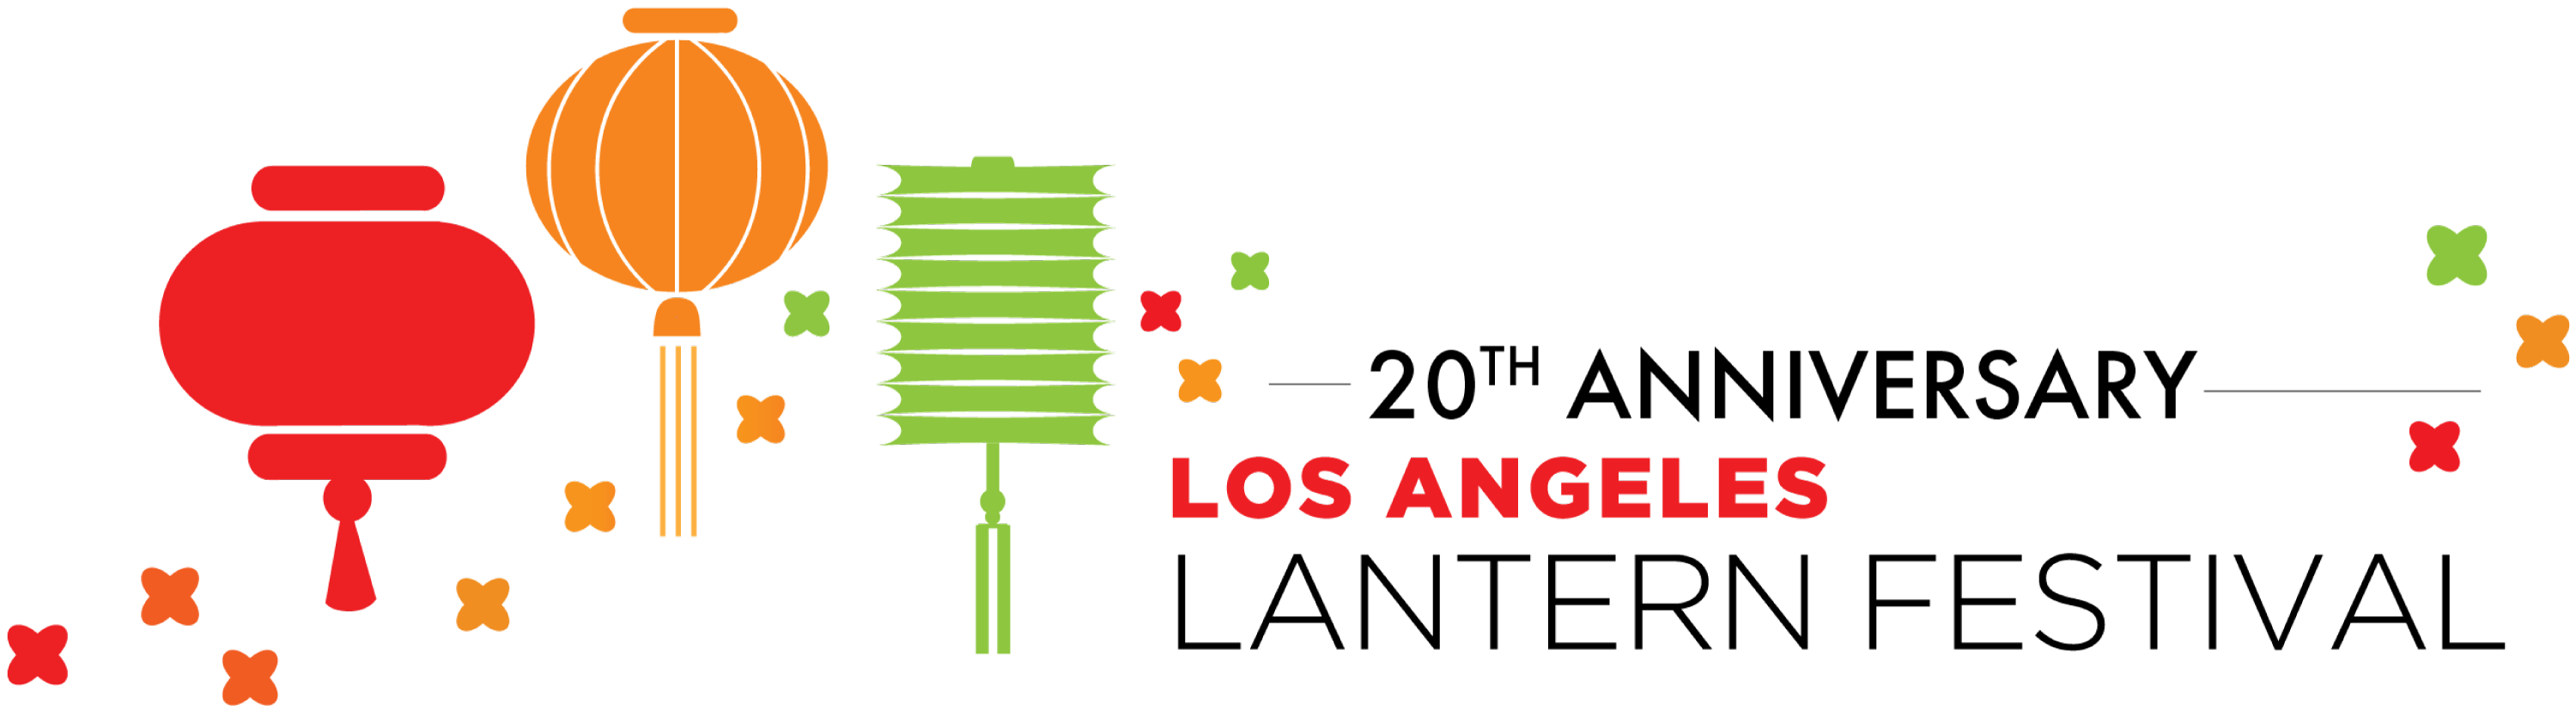 20th Anniversary Los Angeles Lantern Festival